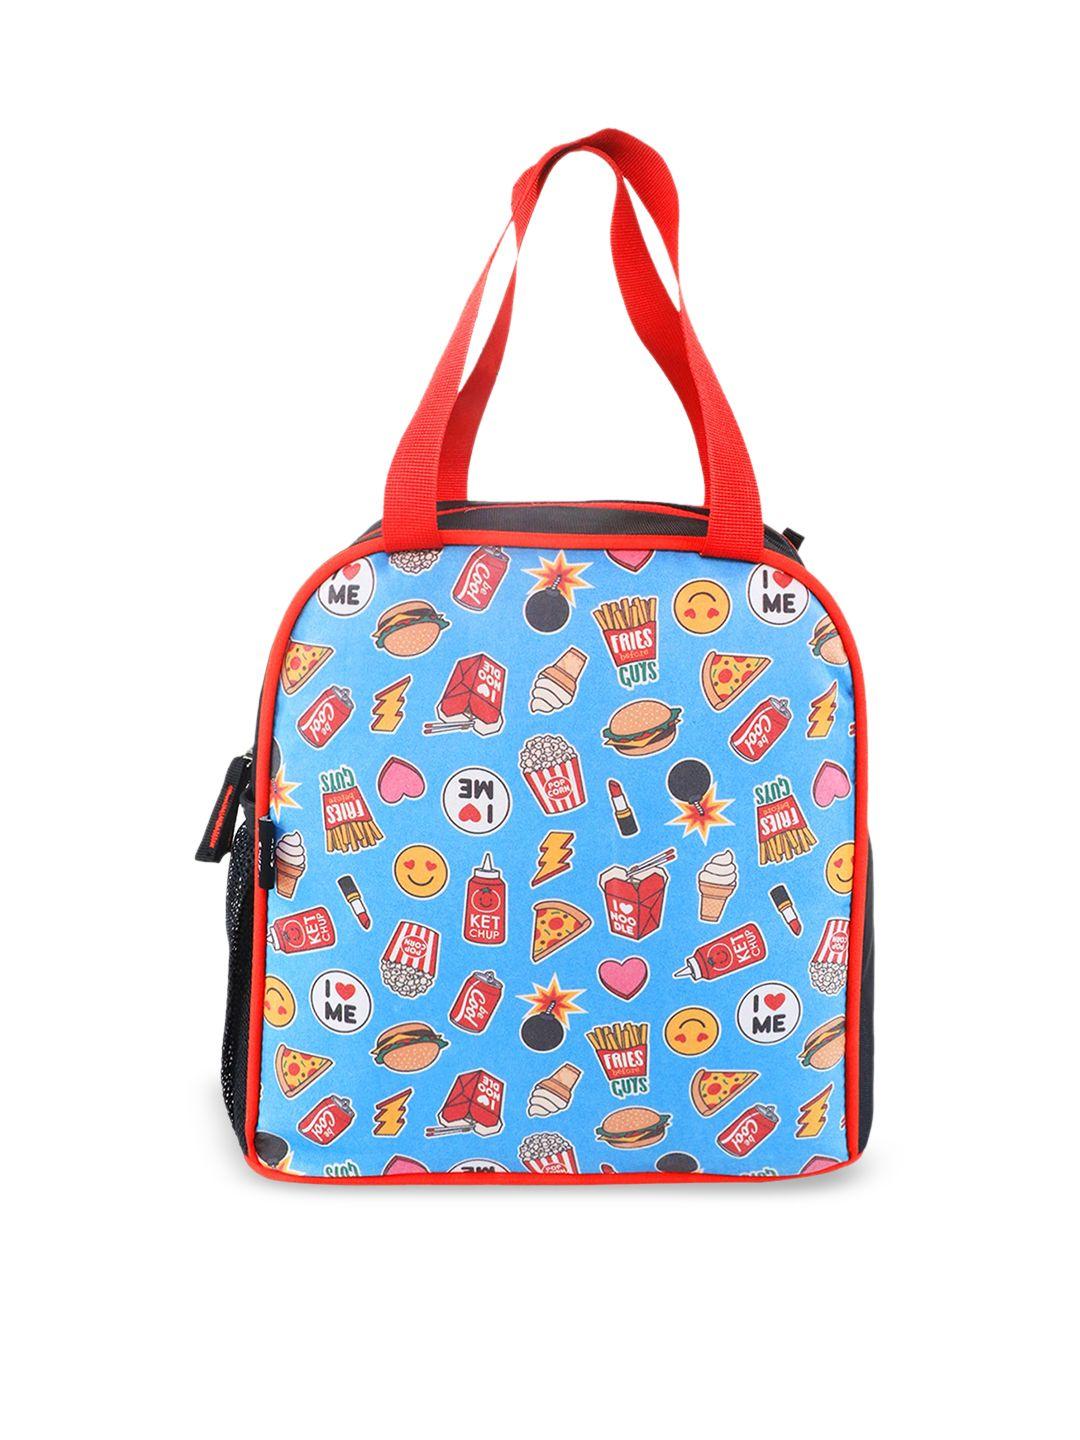 smily kiddos teal blue fast food printed lunch bag